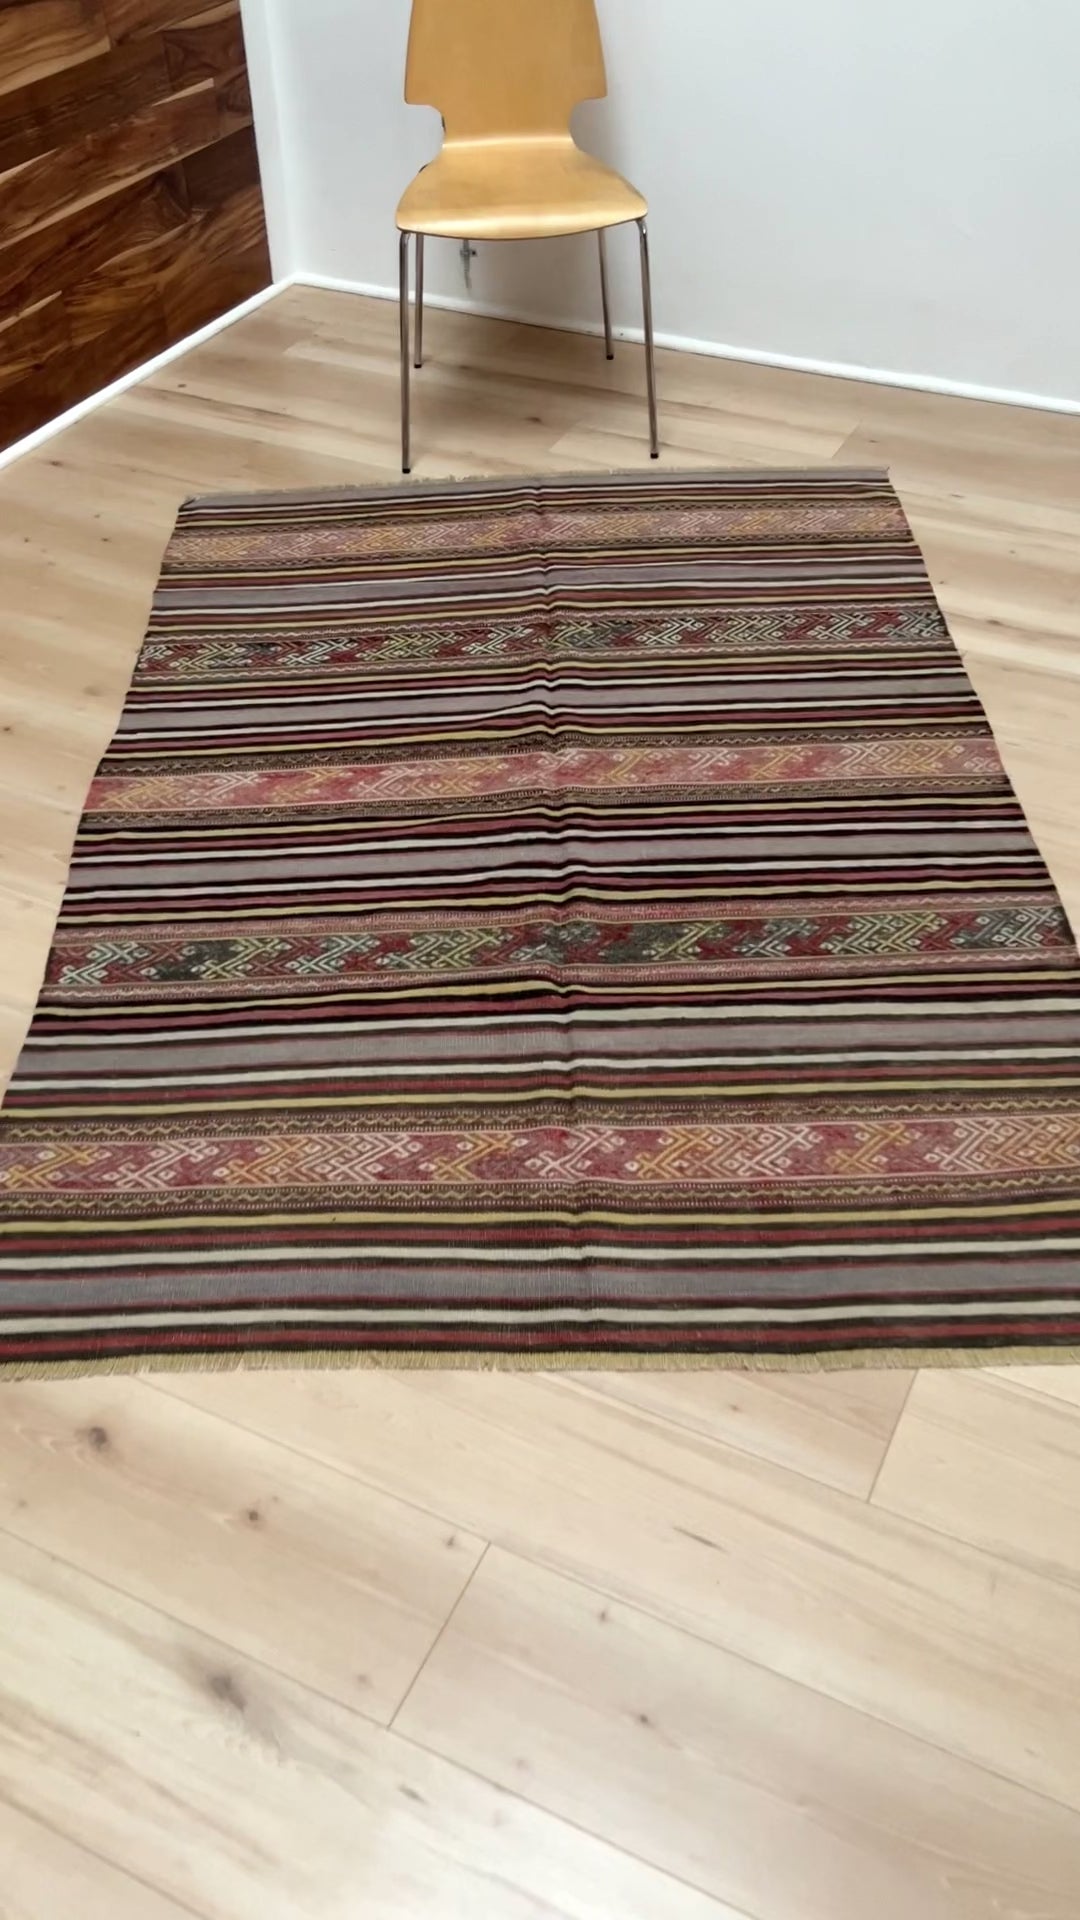 Milas vintage turkish kilim rug. Oriental rug shop san francisco bay area. Buy turkish kilim rug online free shipping to USA and Canada. Vintage rug shop portland, seattle, berkeley.